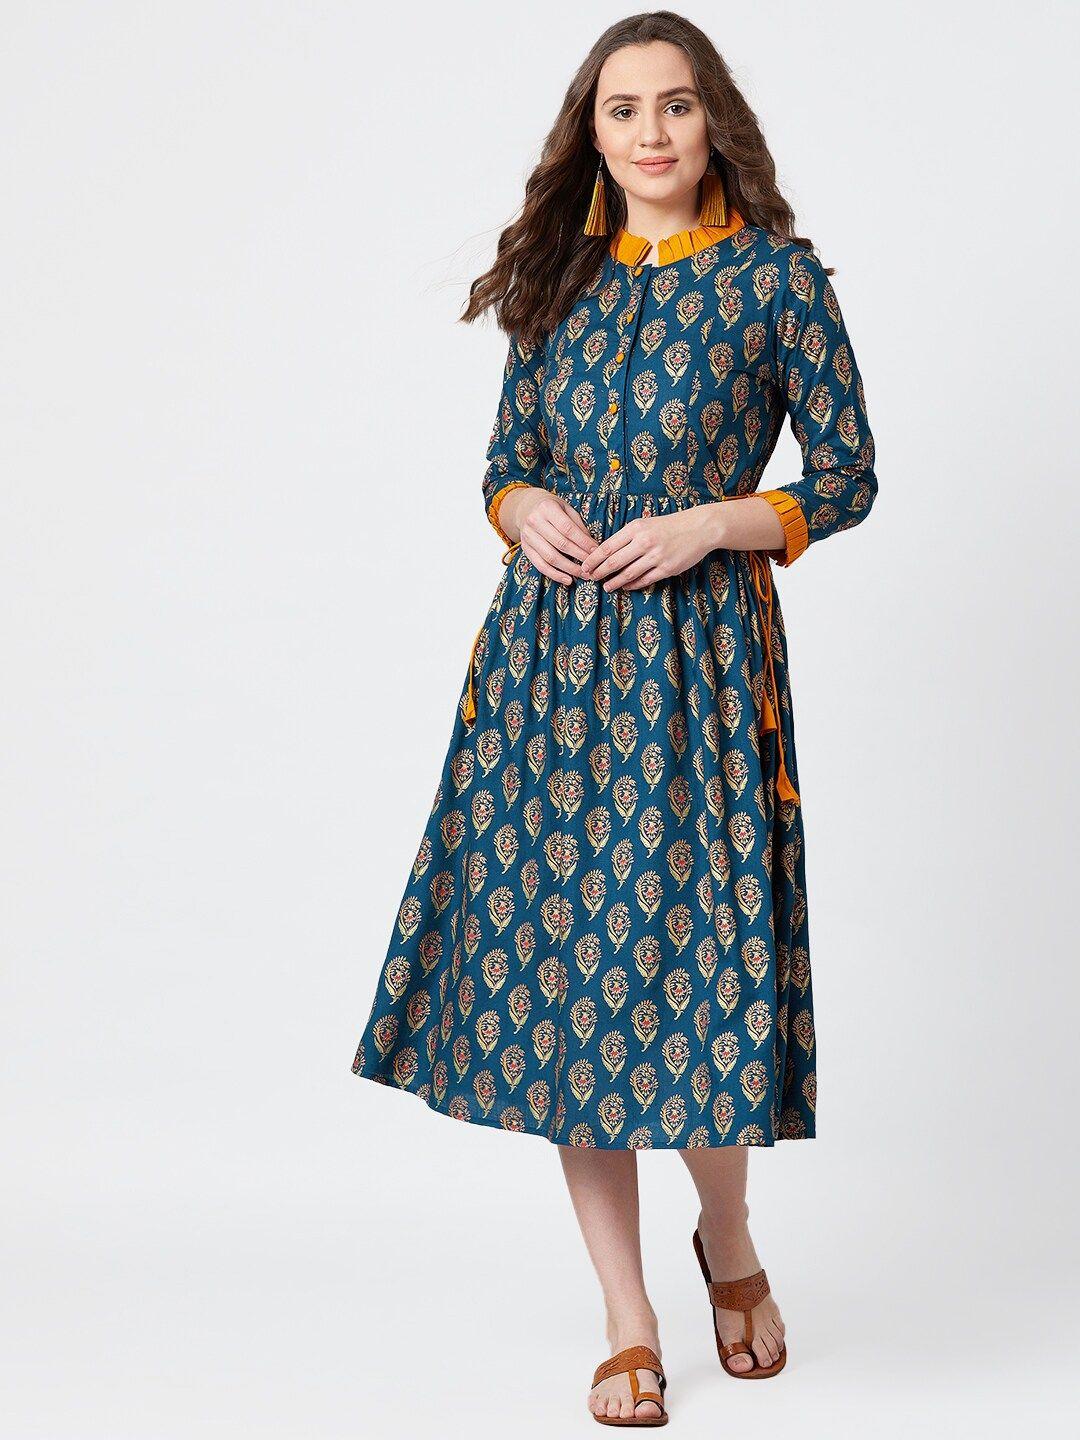 panit women teal blue & golden block ethnic motifs print midi a-line dress with tie-ups